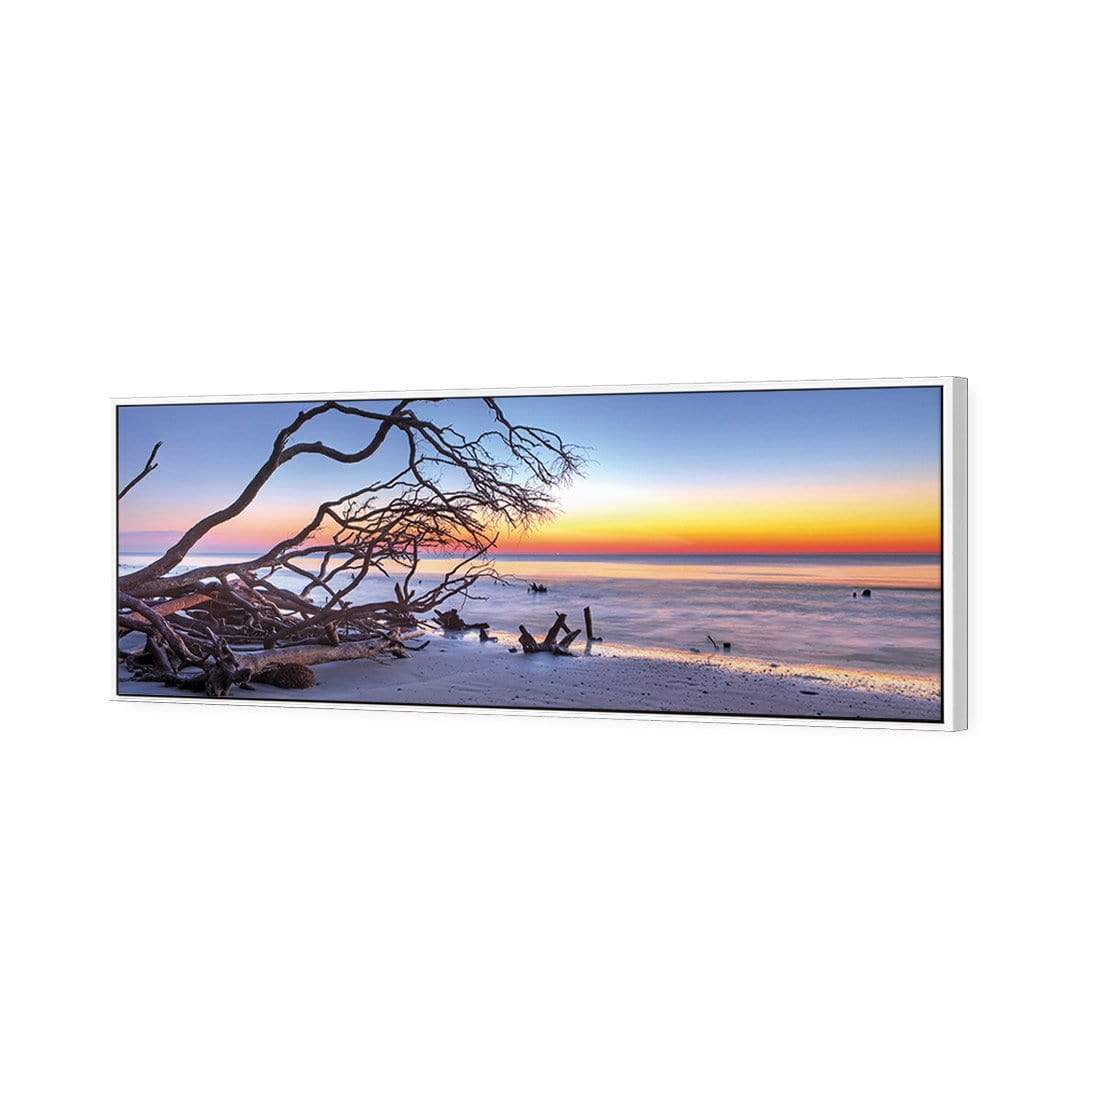 Driftwood Sunrise (Long) - wallart-australia - Canvas